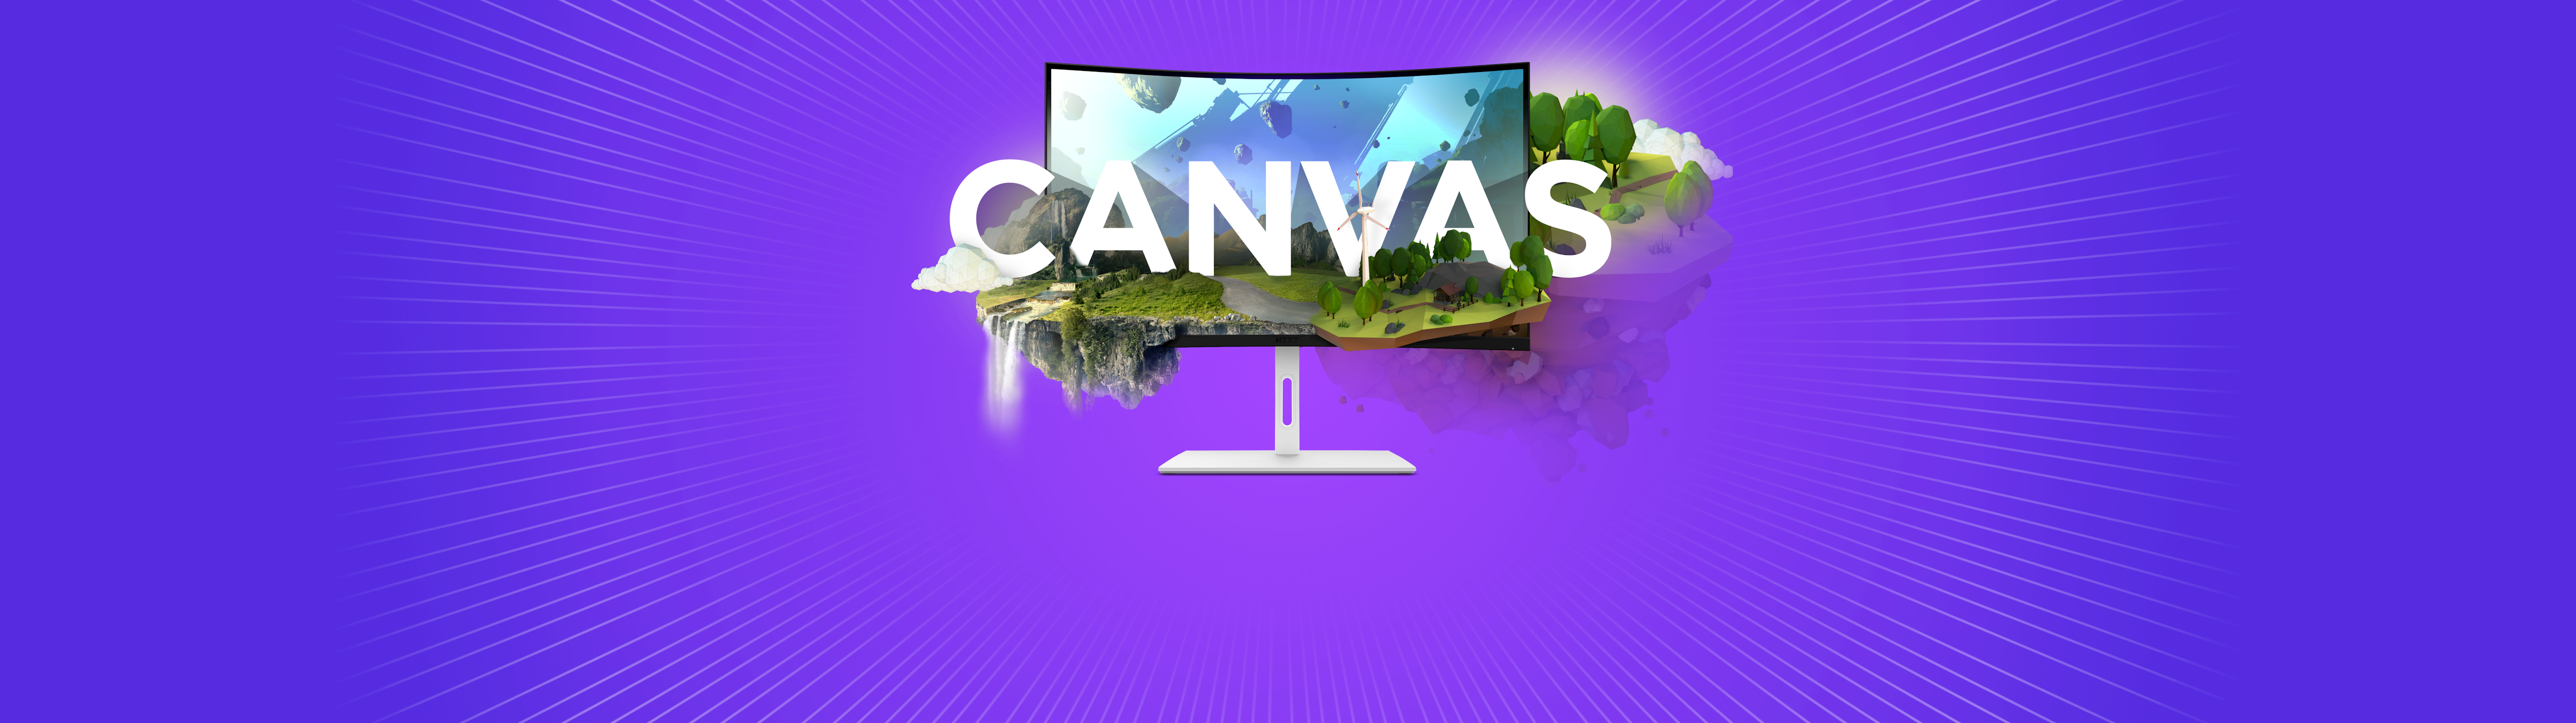 Canvas QHD Monitor Purple Background